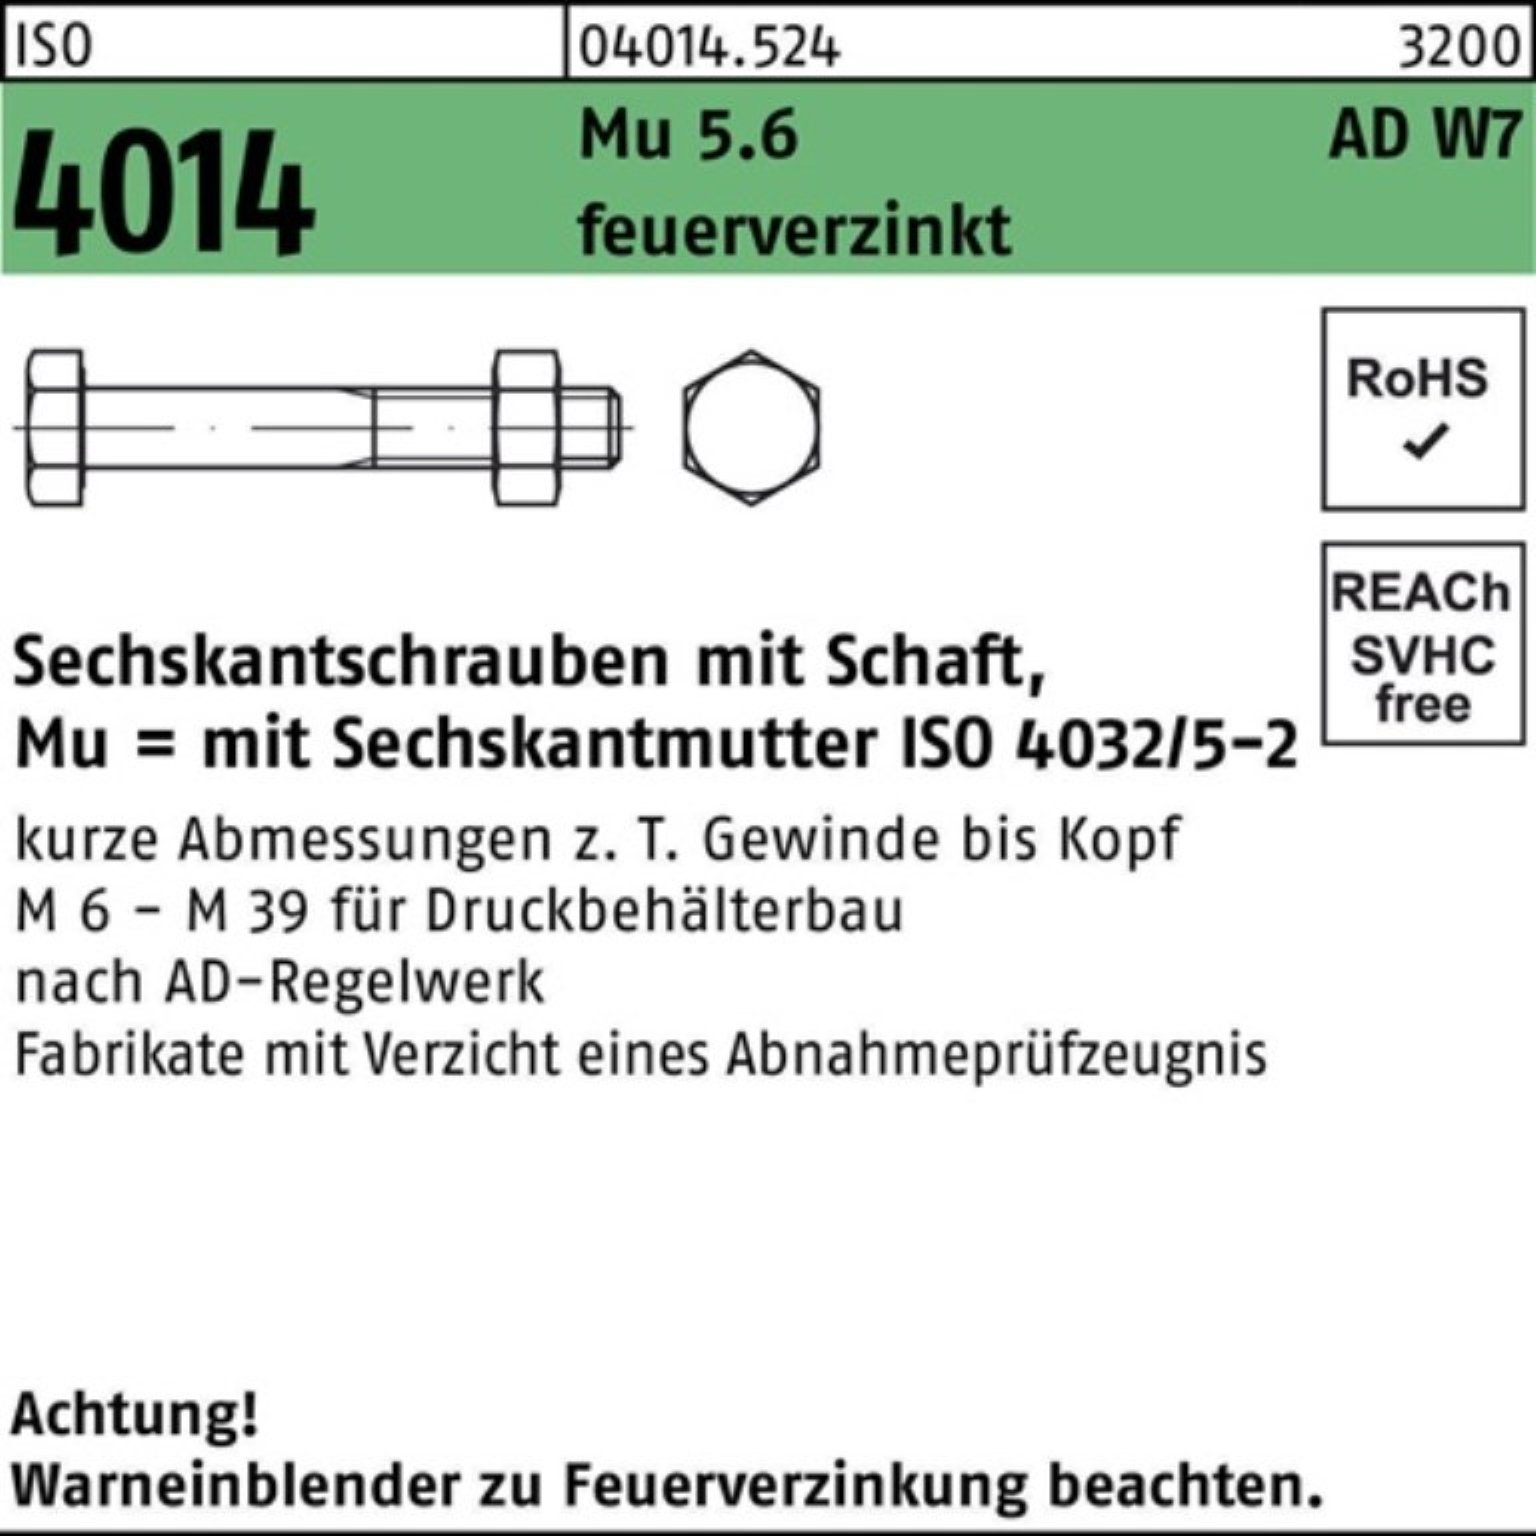 Bufab Sechskantschraube 100er W7 170 ISO Pack 5.6 Sechskantschraube Schaft M20x Mu 4014 feuerv